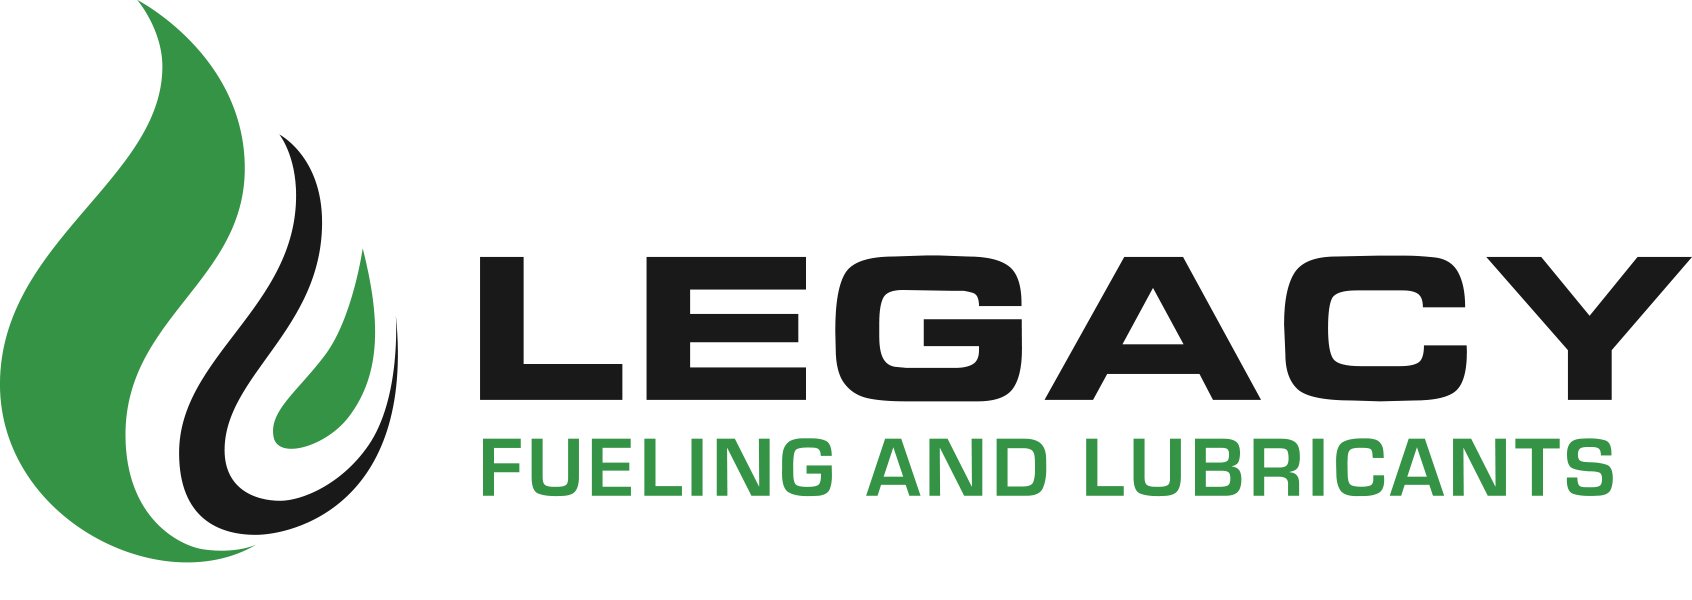 Automotive Lubricants Logo - Automotive. Legacy Fuels & Lubricants